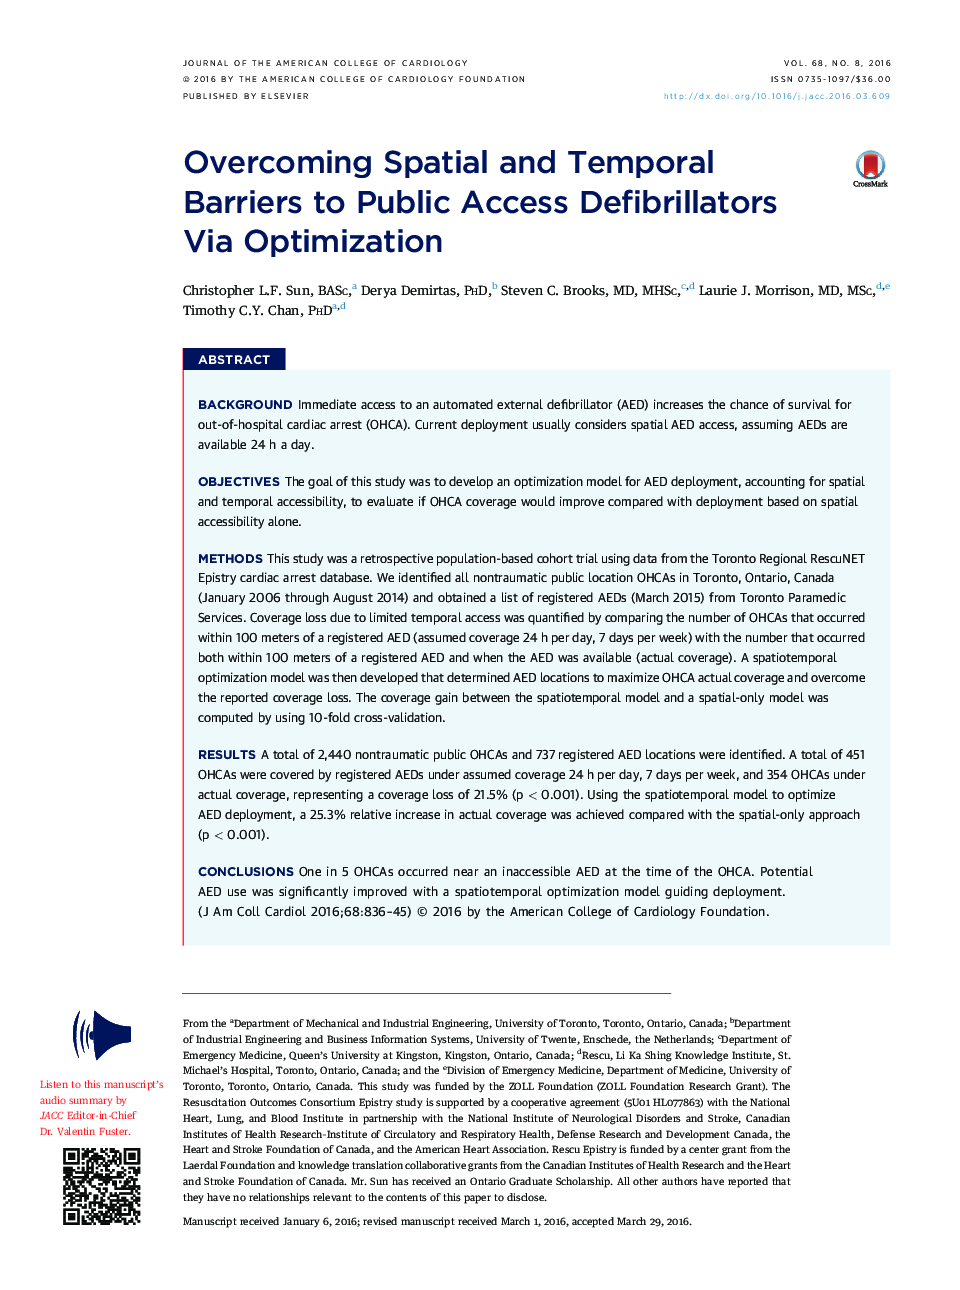 Overcoming Spatial and Temporal BarriersÂ to Public Access Defibrillators ViaÂ Optimization